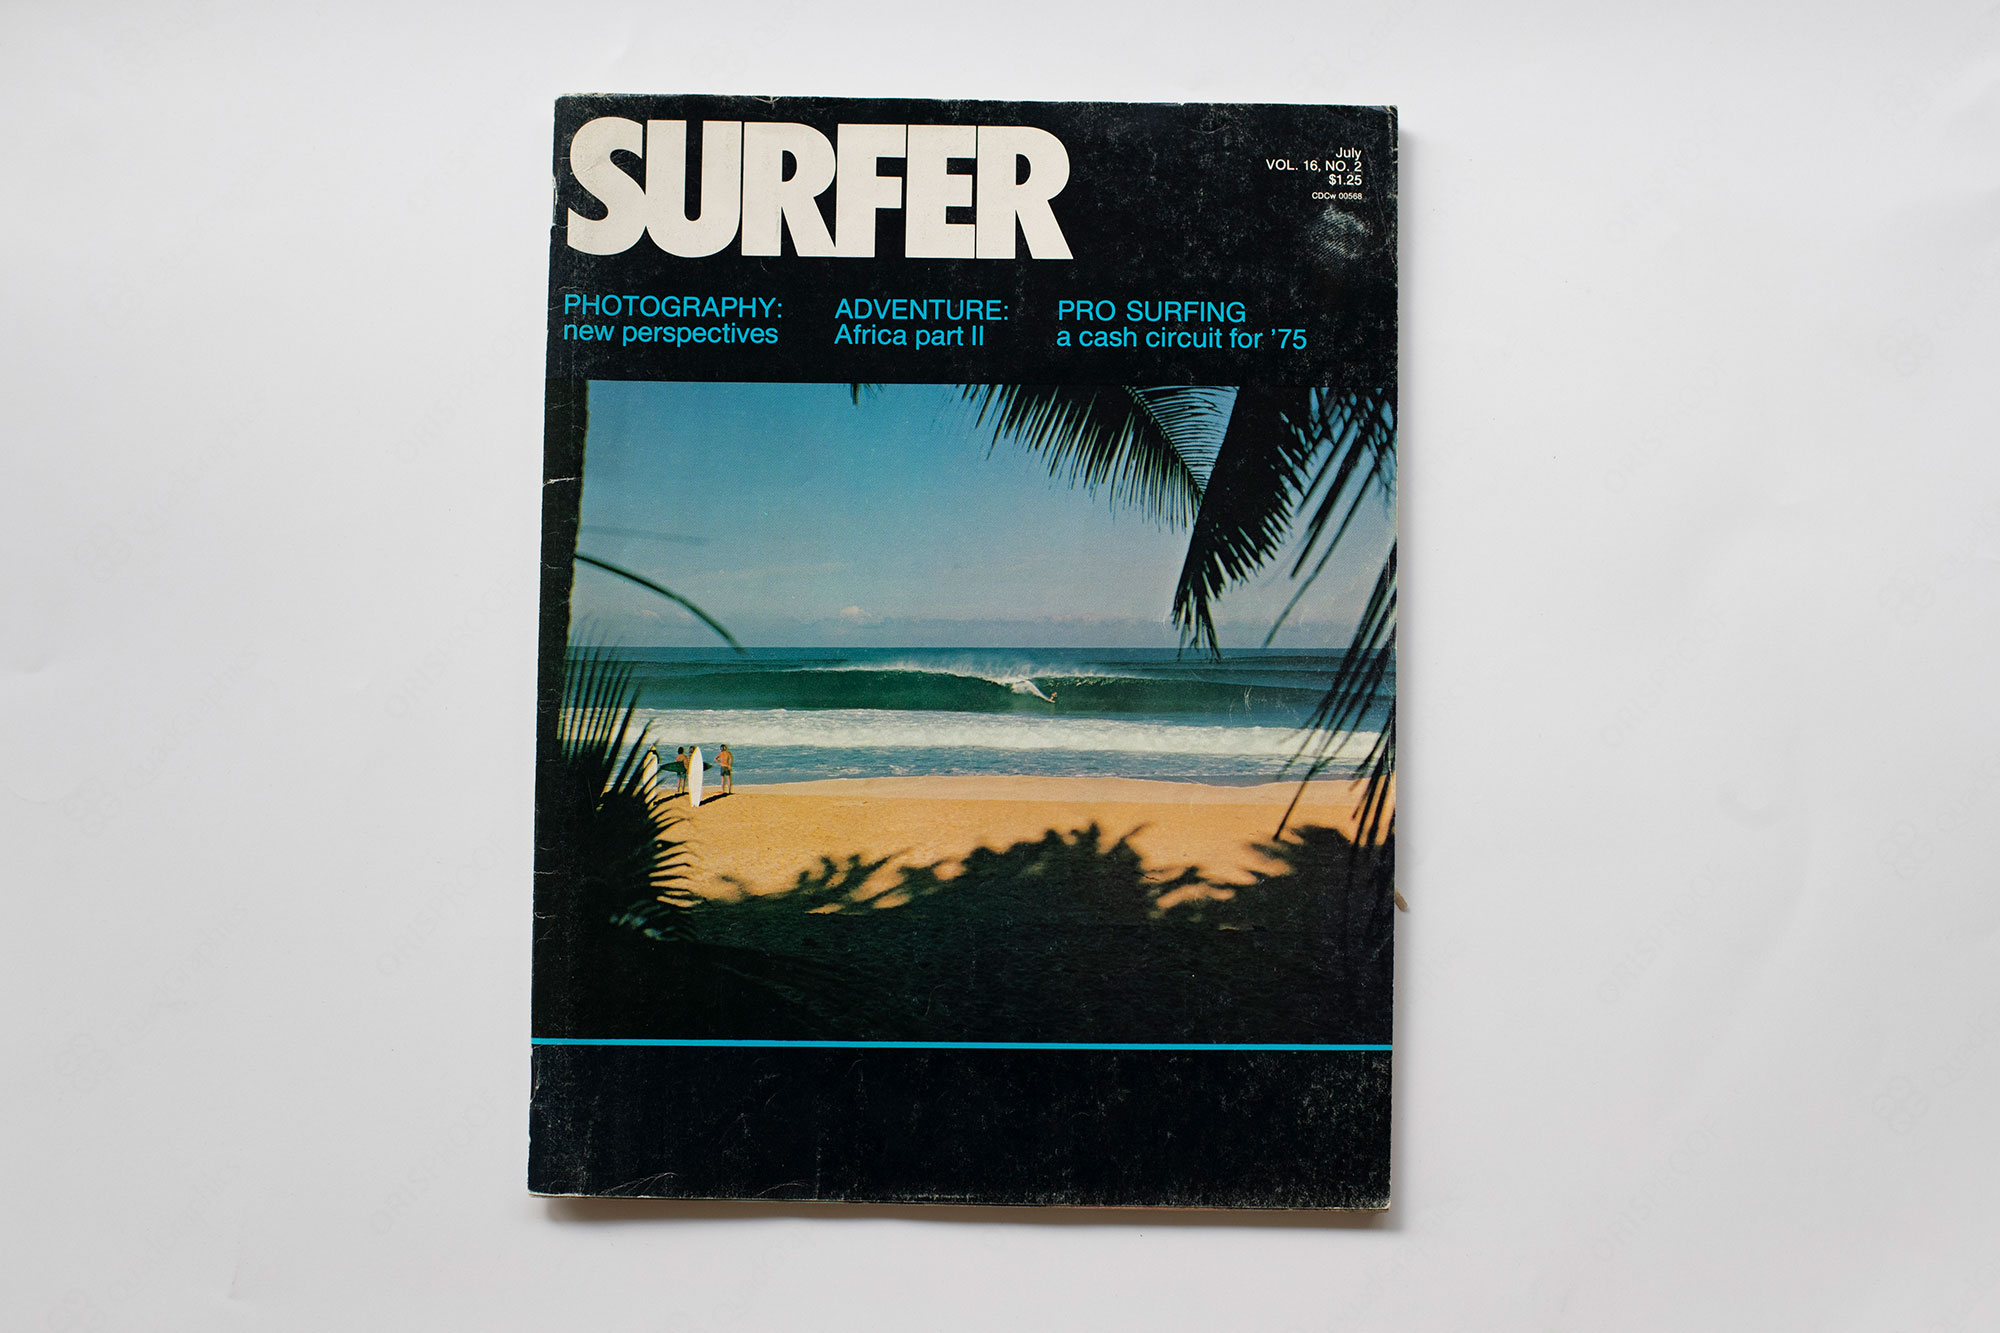 SURFER magazine